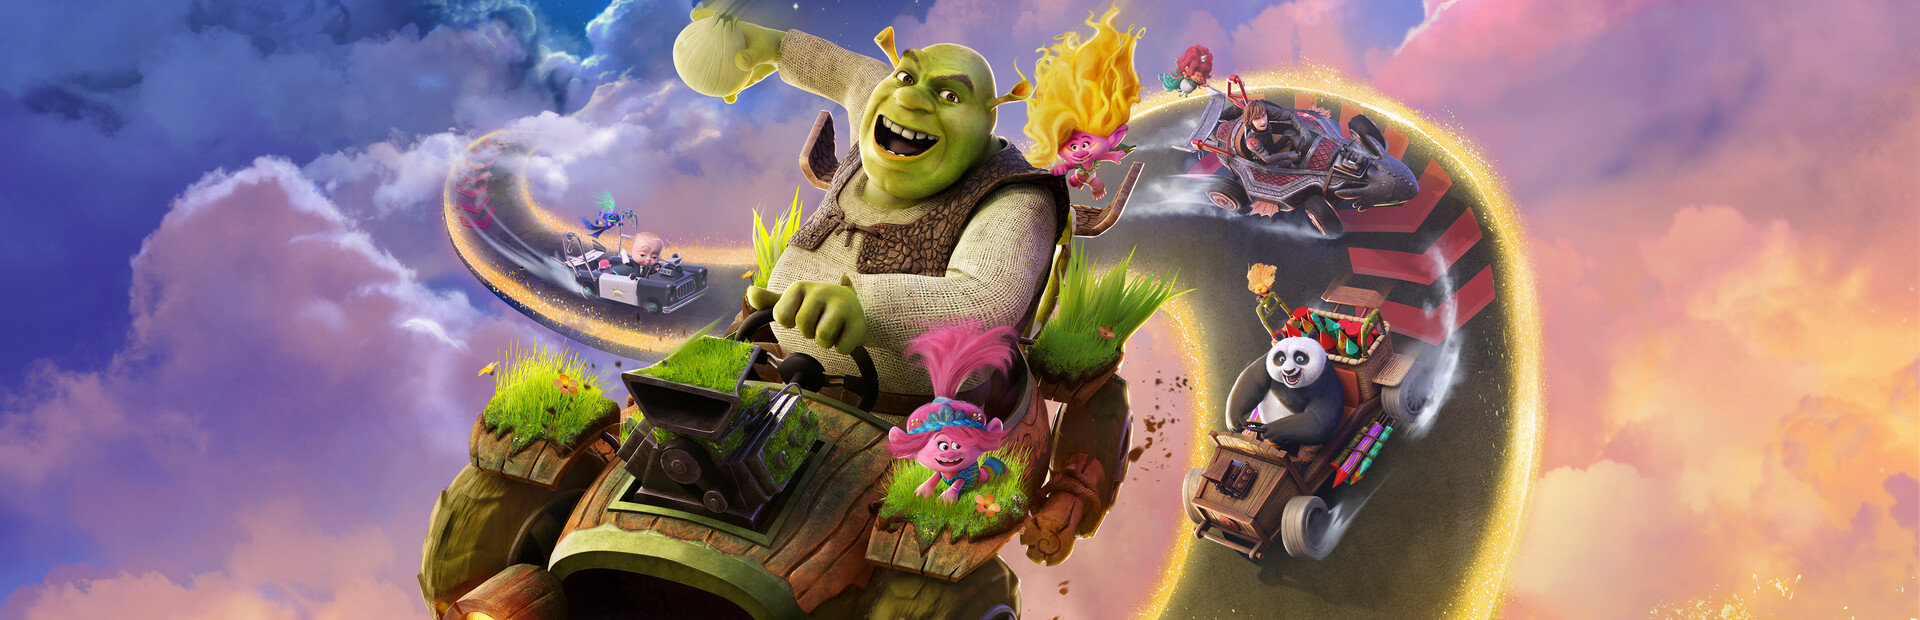 DreamWorks All-Star Kart Racing cover image